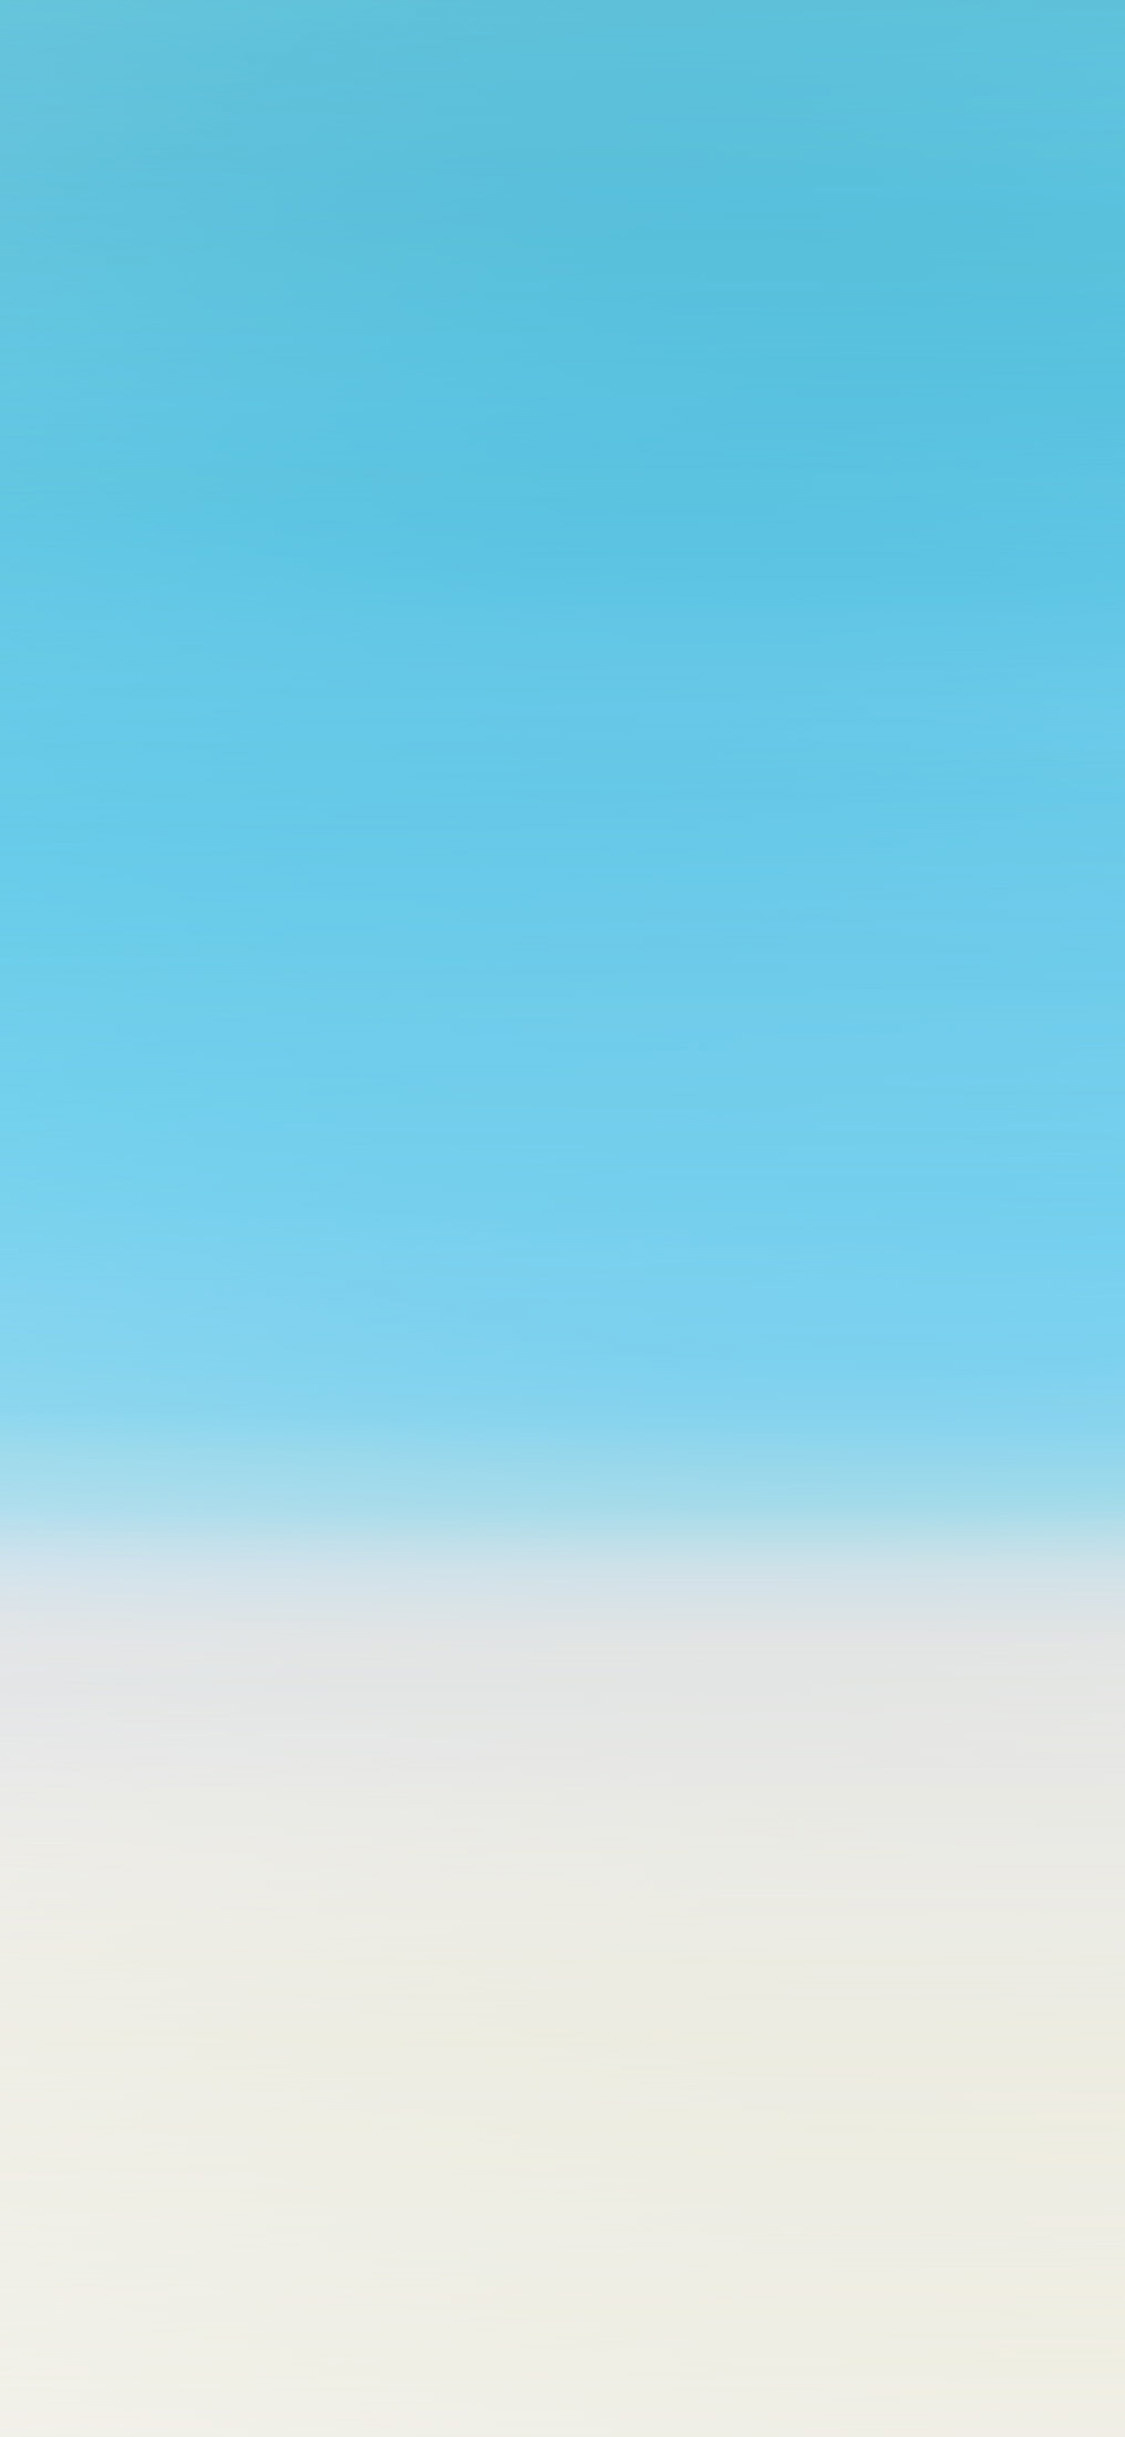 1125x2437 motion-sky-blue-white-gradation-blur iPhone X Wallpaper